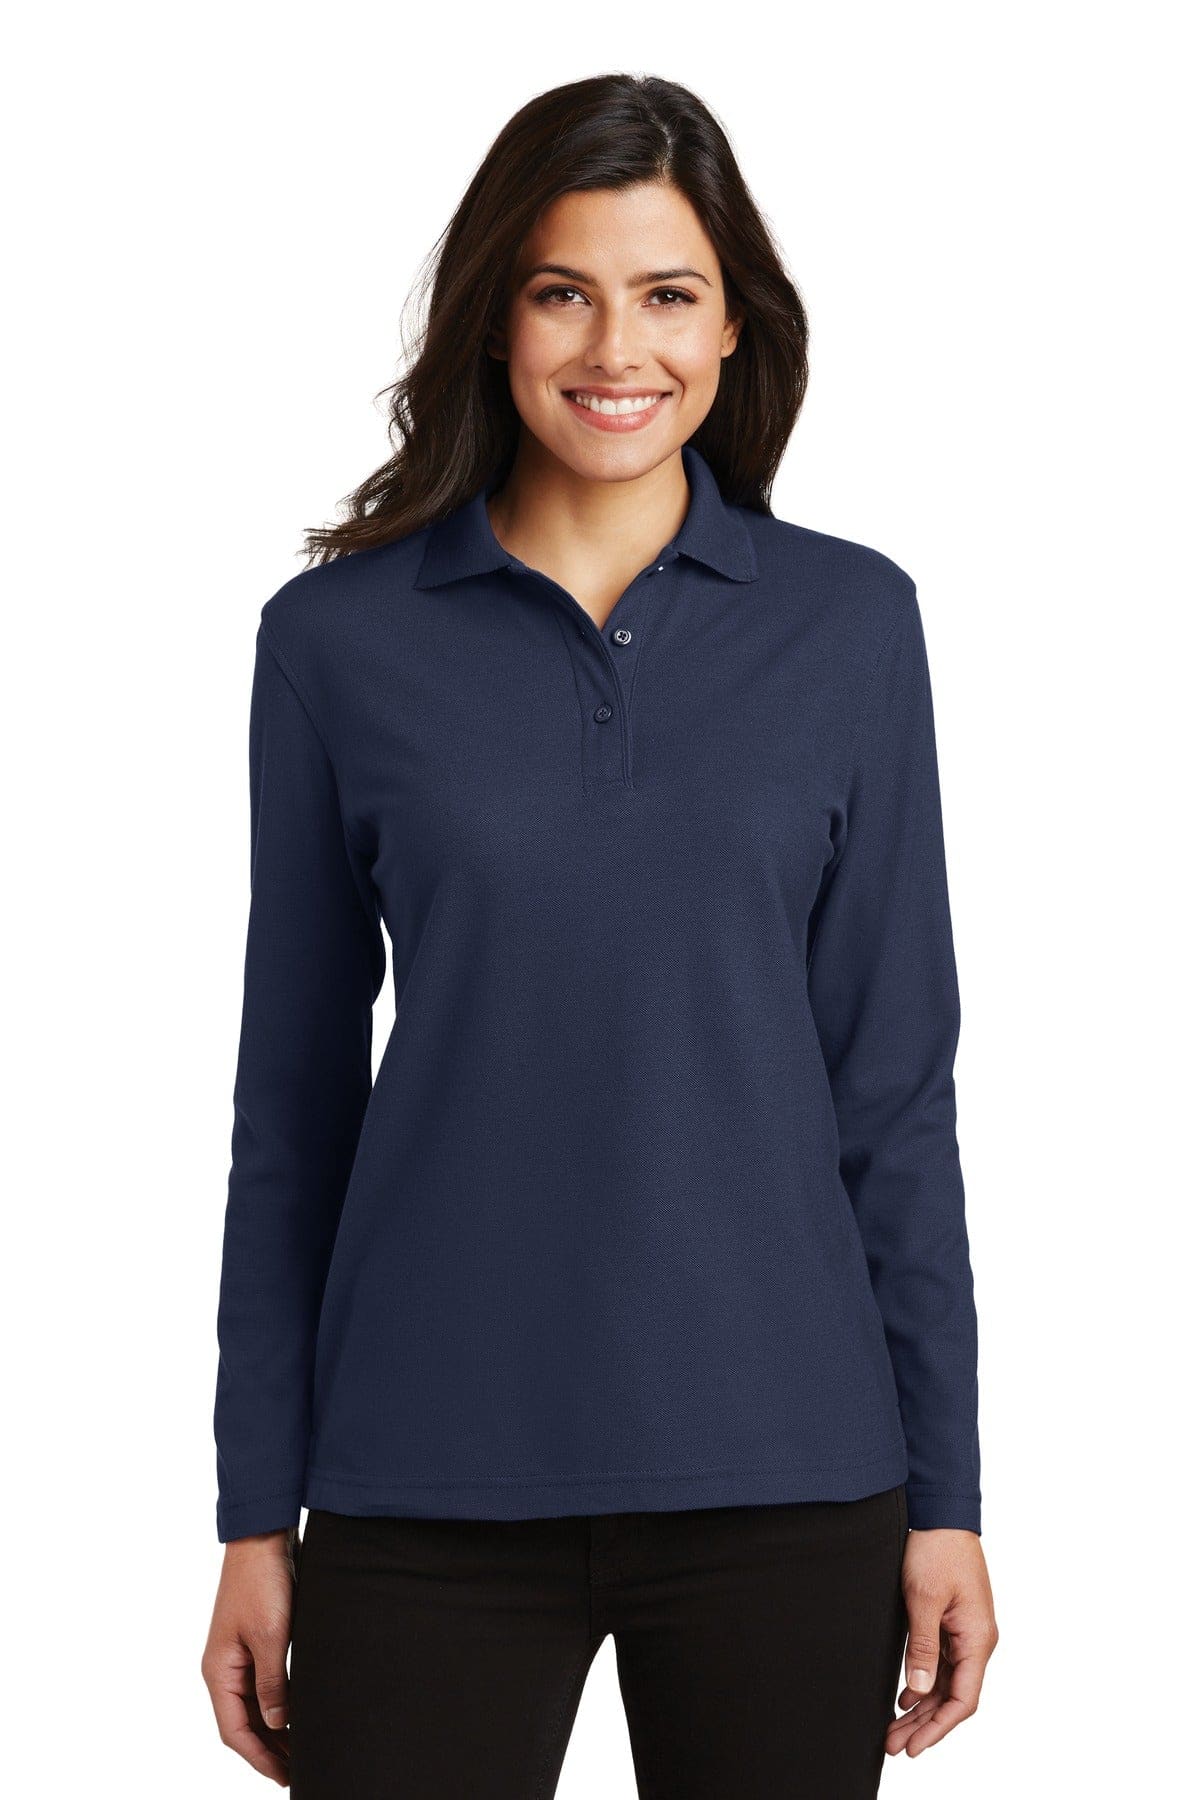 Ladies Long Sleeve Polo L500ls - Custom | Shirts